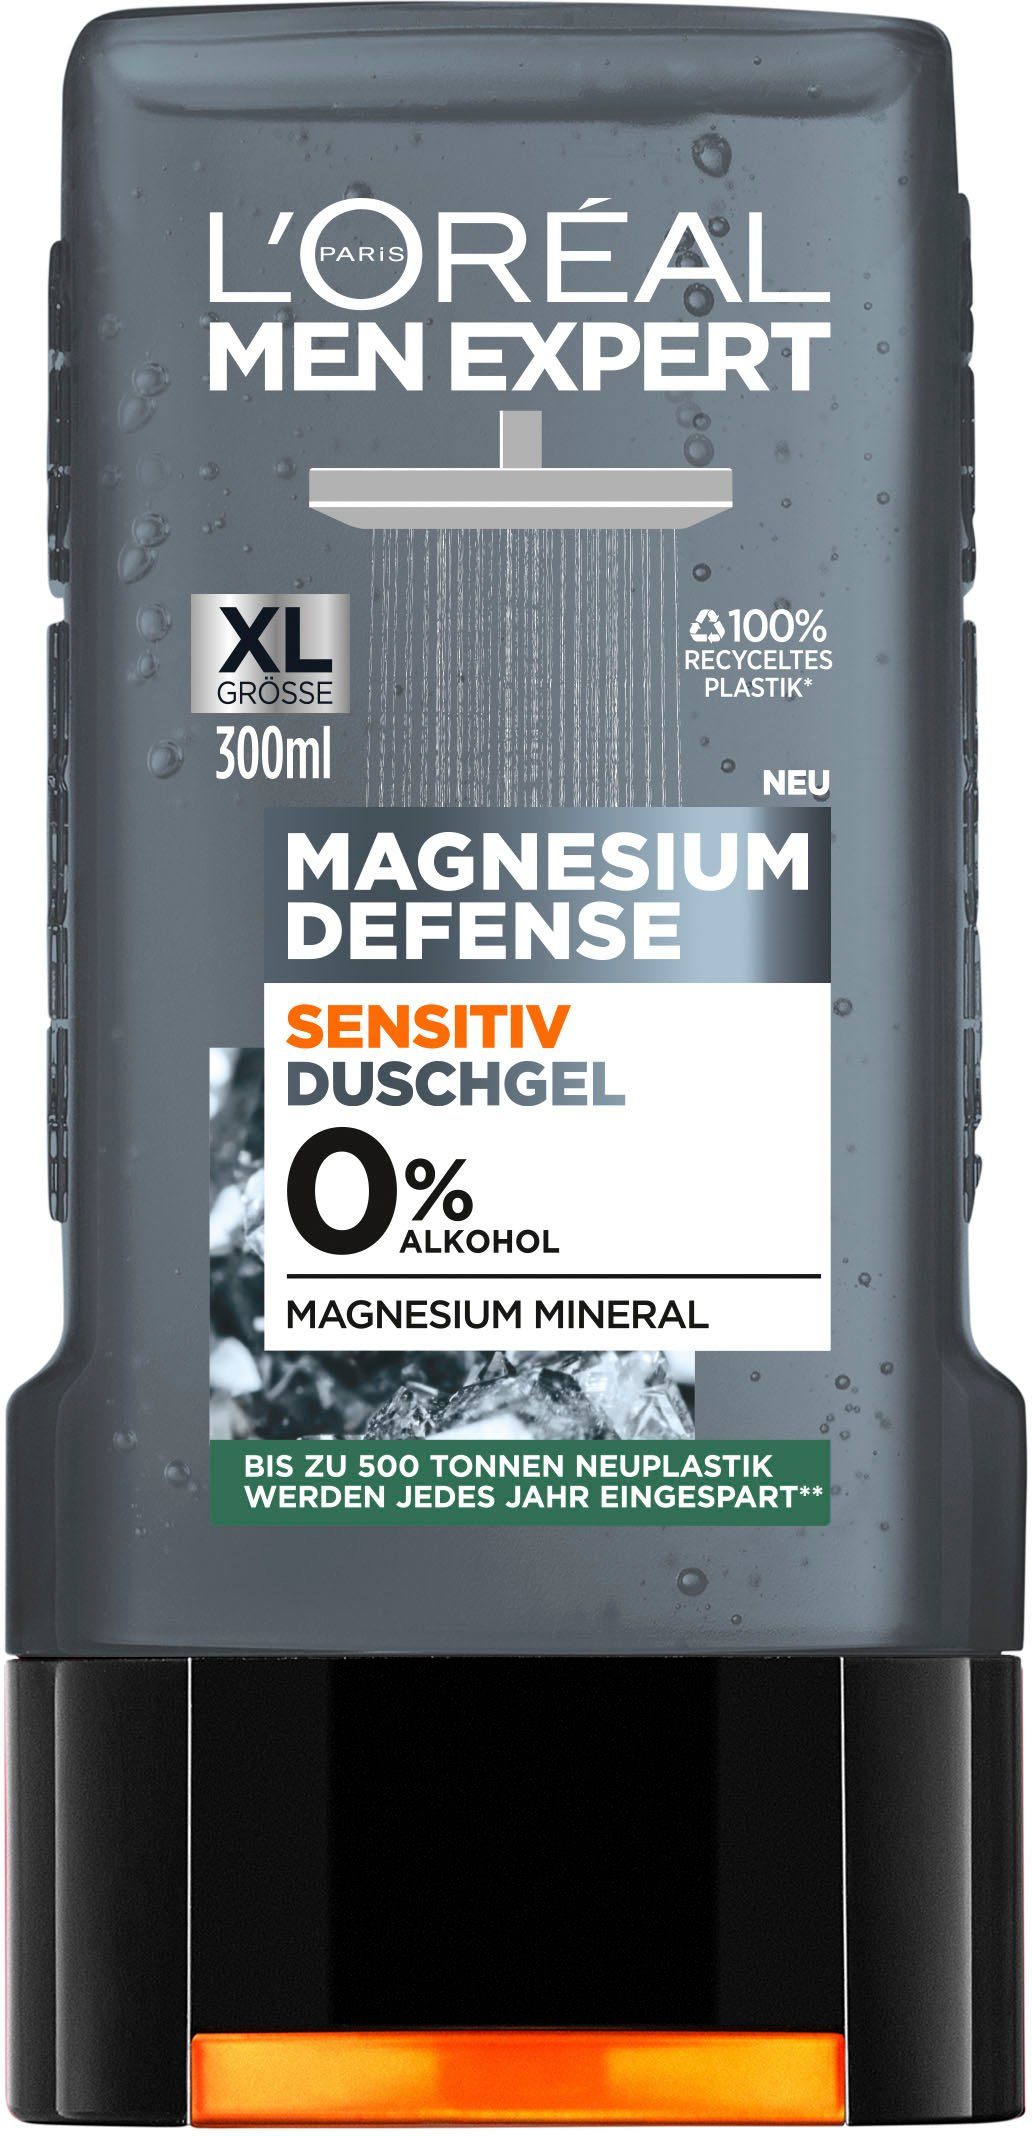 Duschgel Defense Magnesium L'ORÉAL EXPERT MEN PARIS Sensitiv